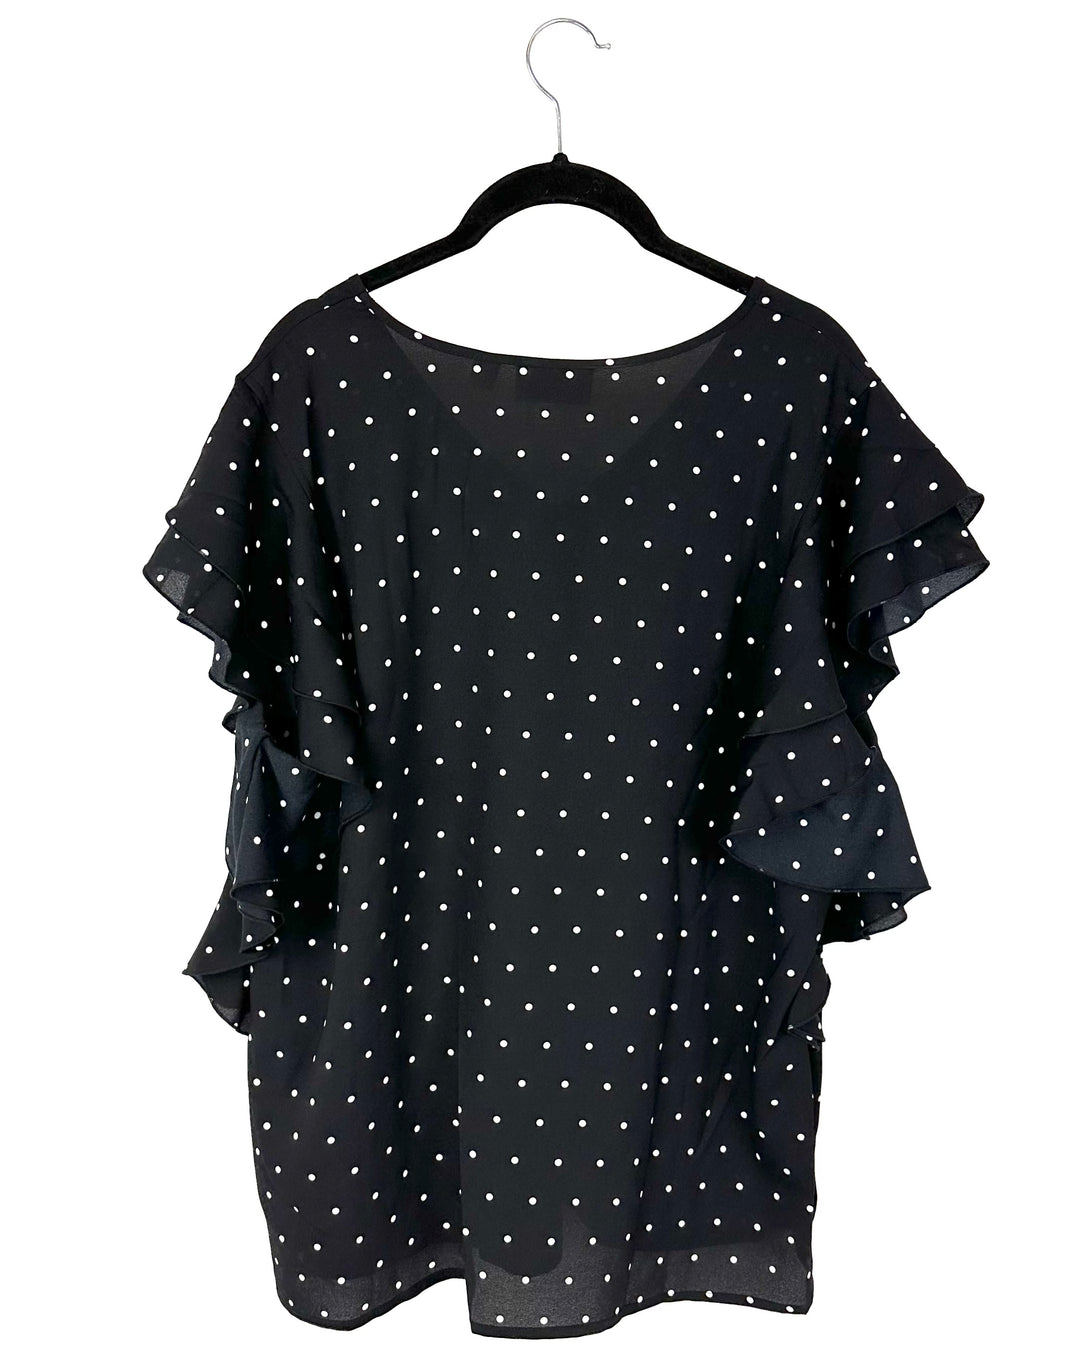 Black With White Polka Dot Short-Sleeve Blouse - Size 14-16